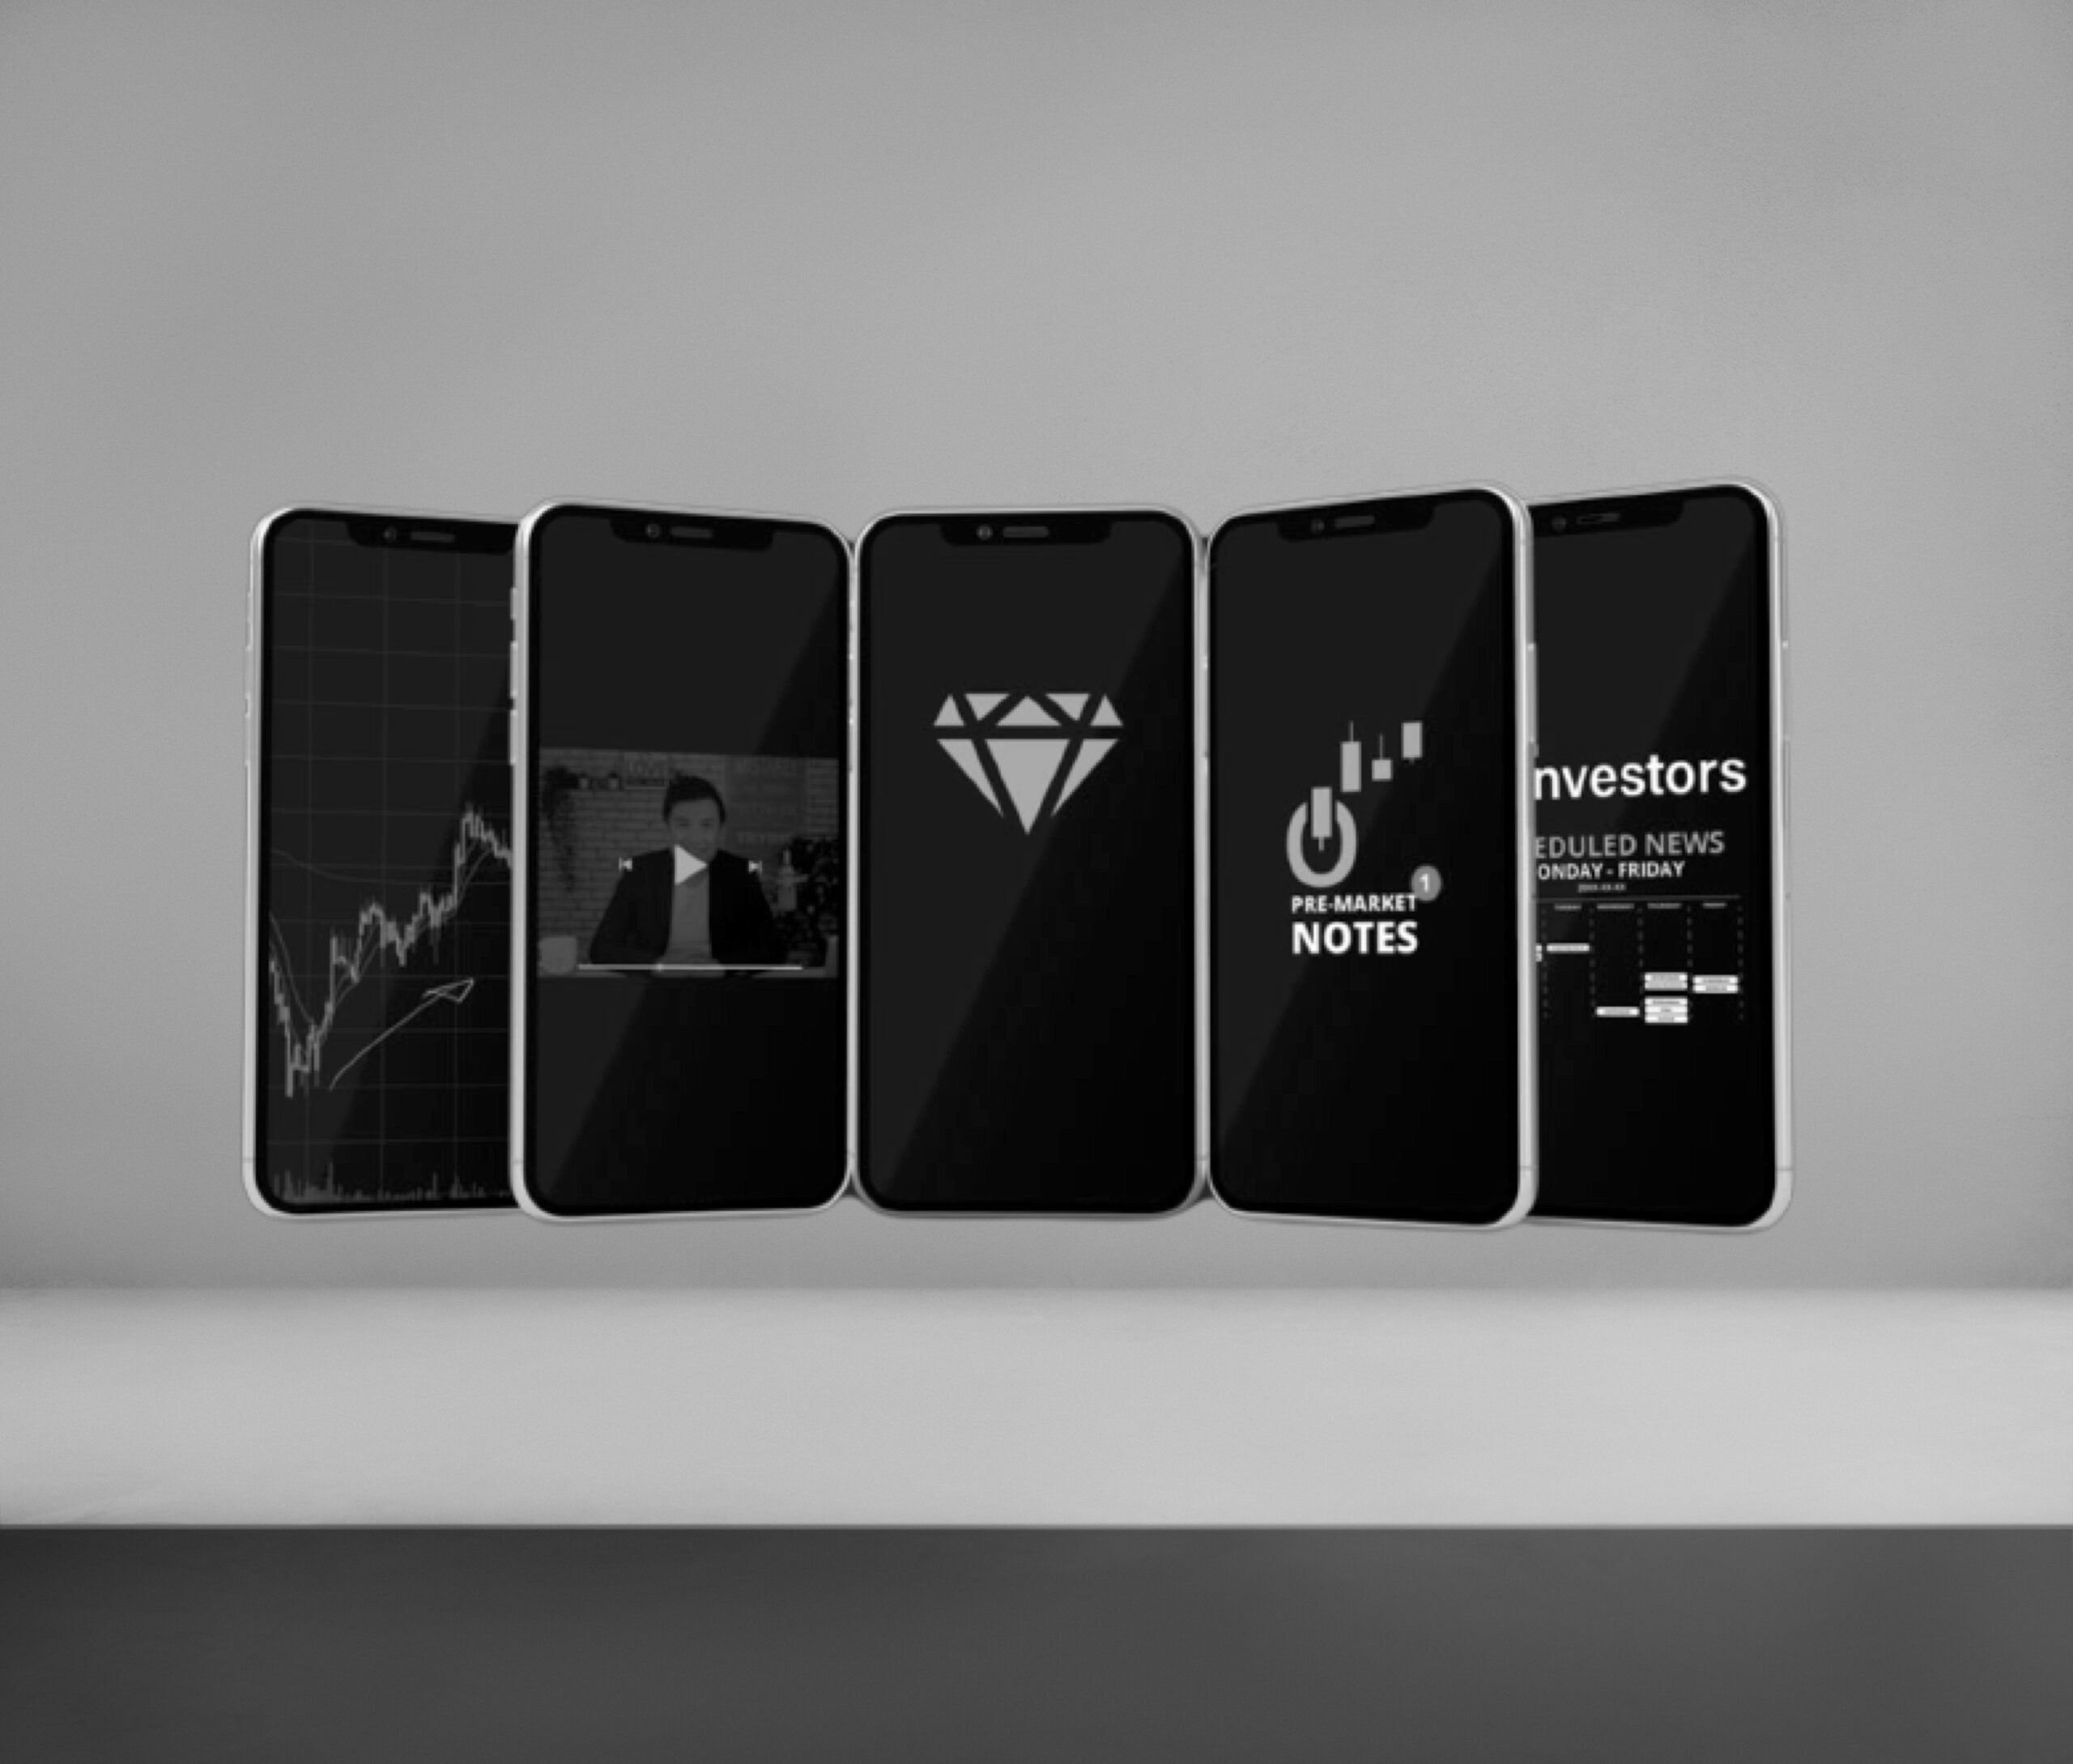 jyd-project-doinvestors-app-mobile-phone-view